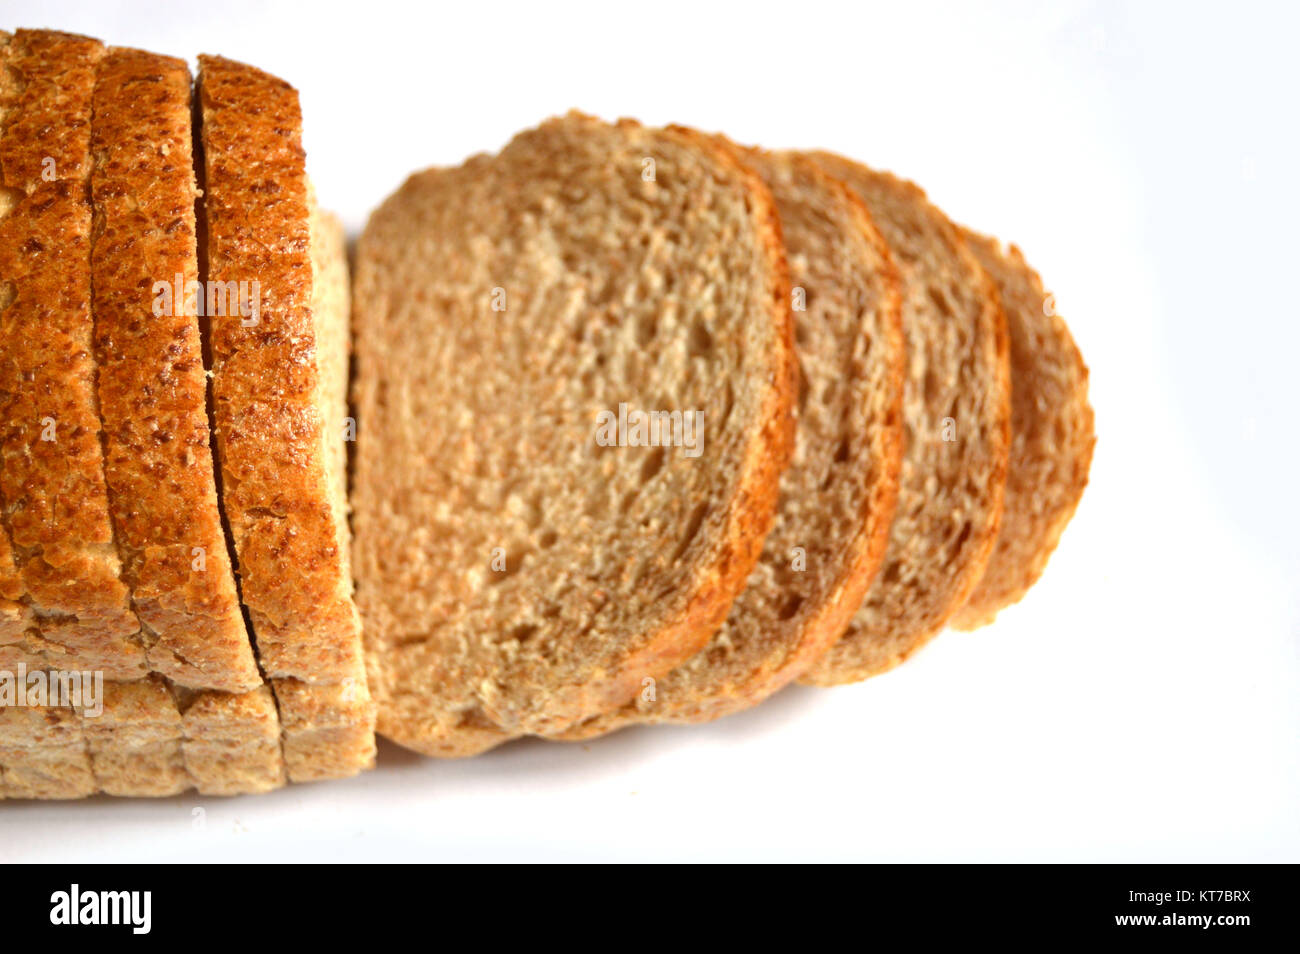 Bran bread for health, bran bread pictures, sliced bran breads, bran bread for patients Stock Photo